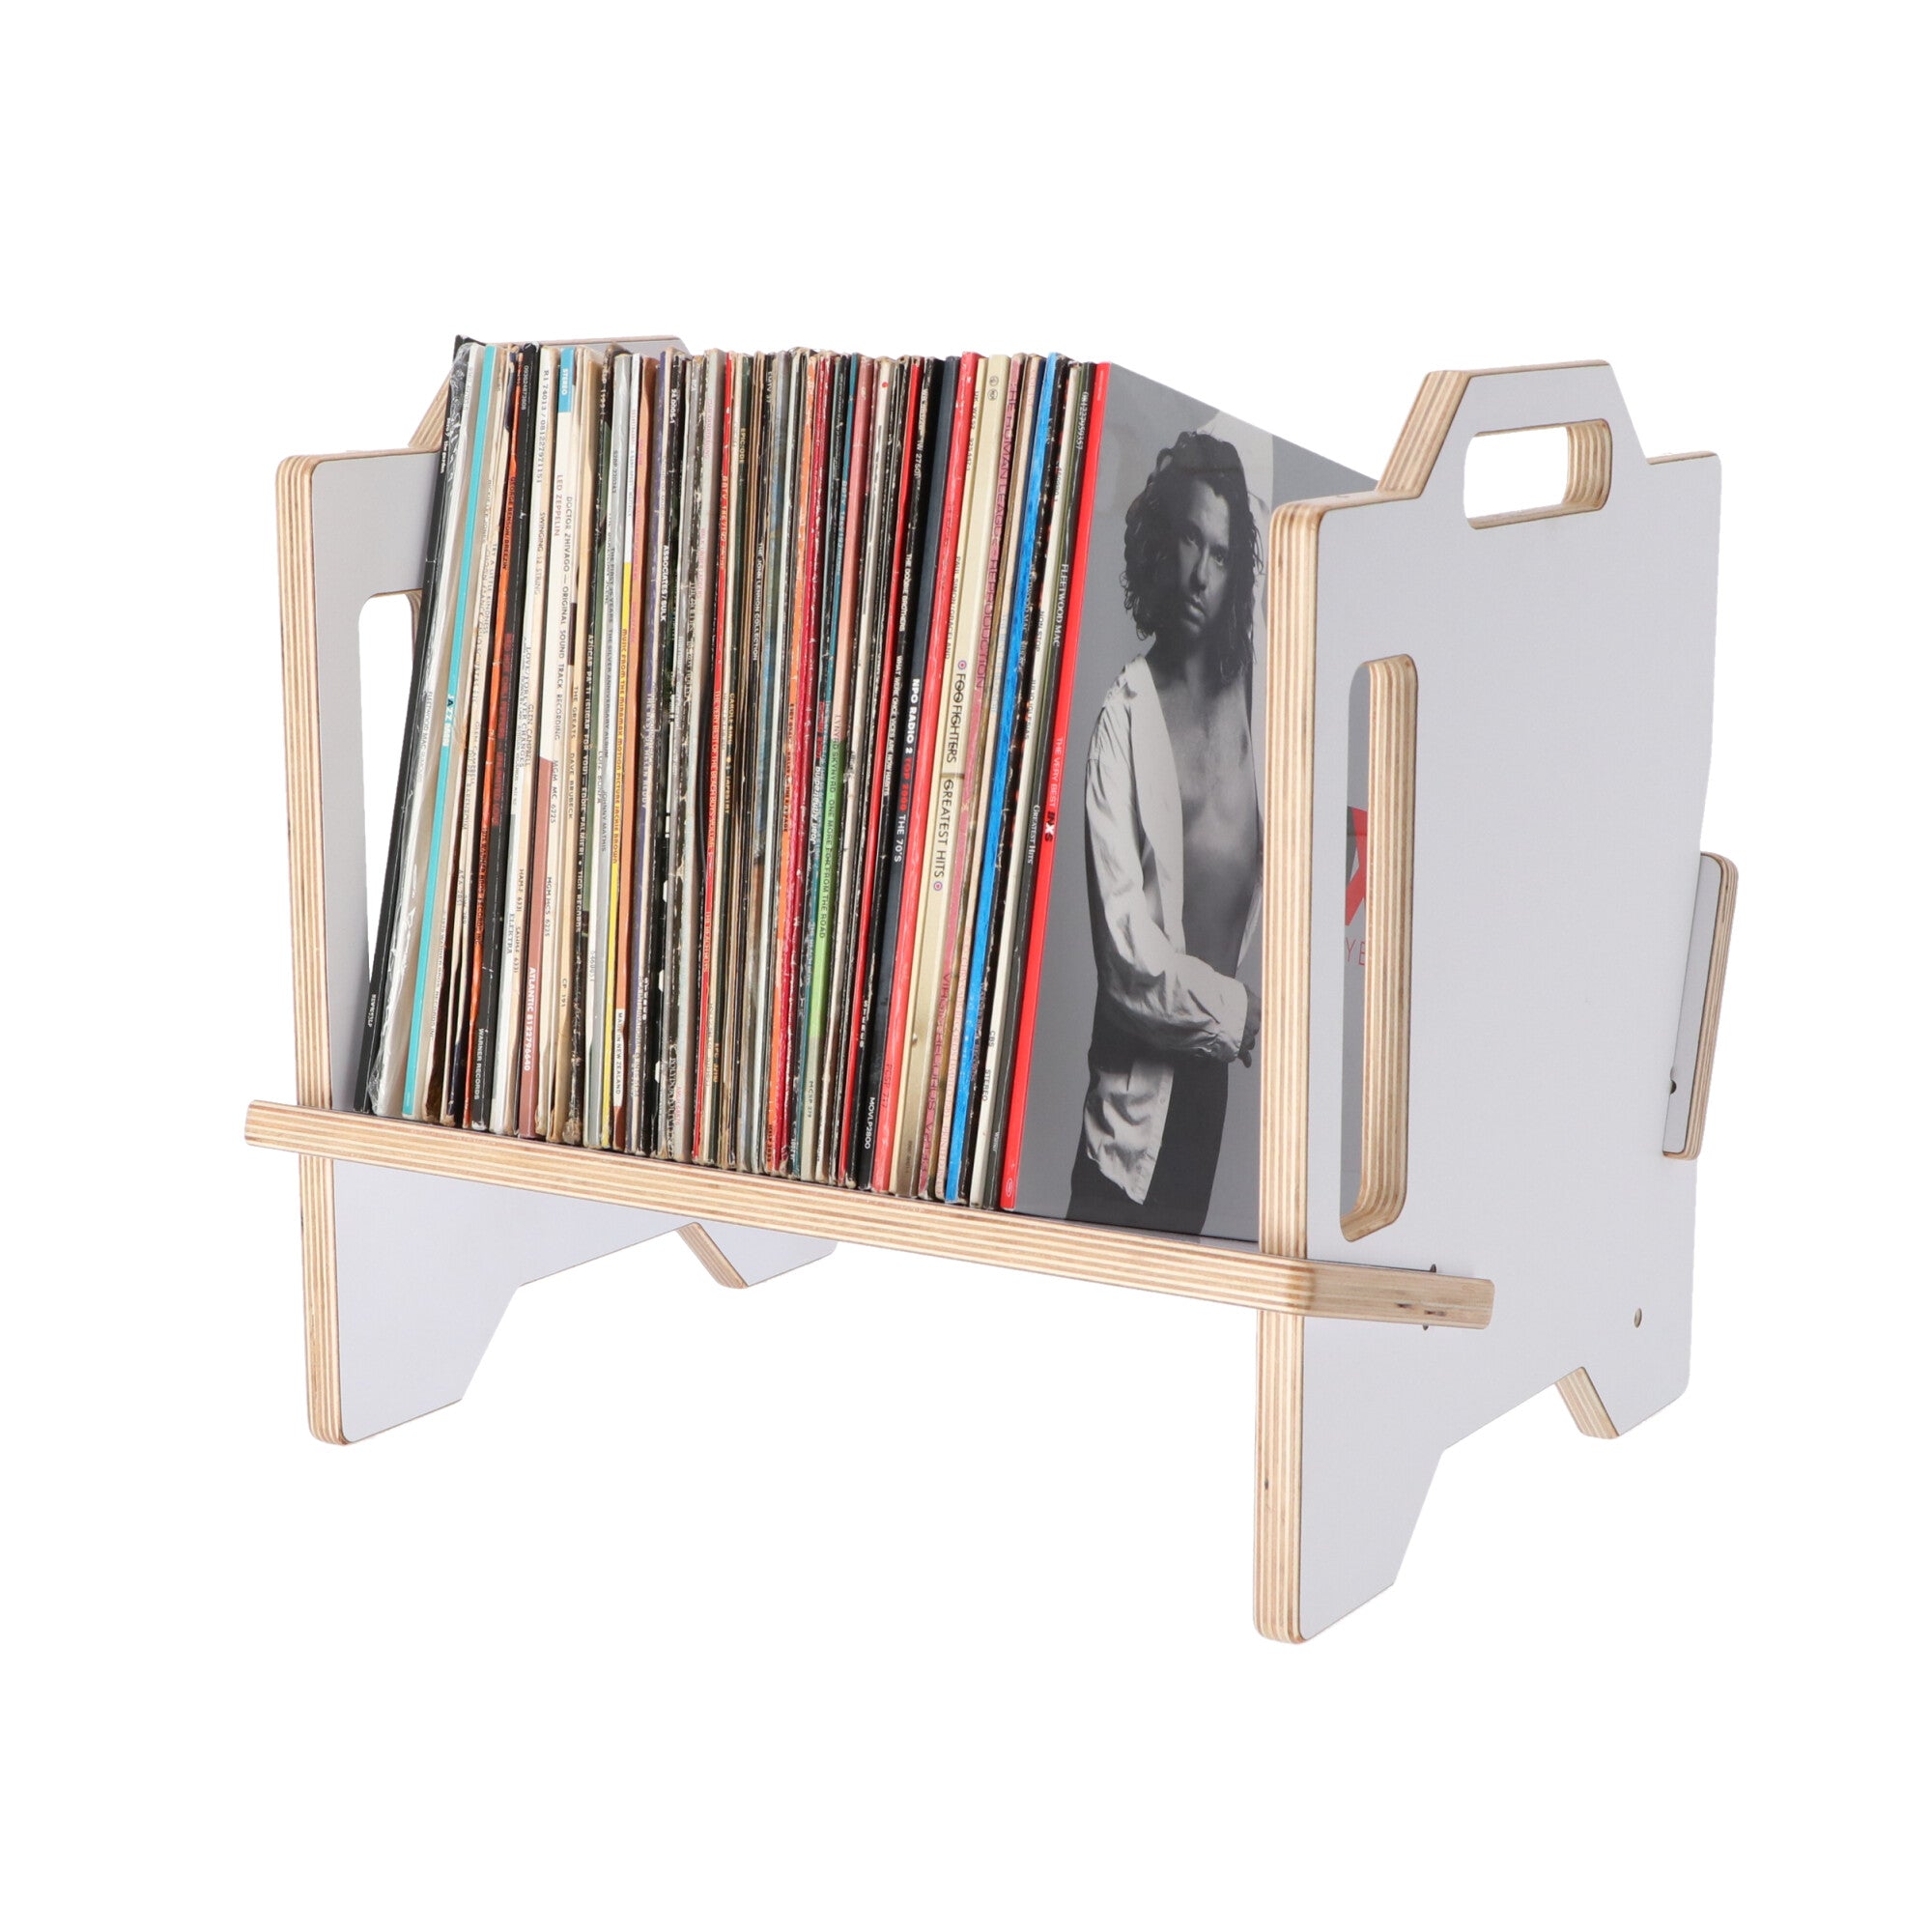 Vinyl Storage rack